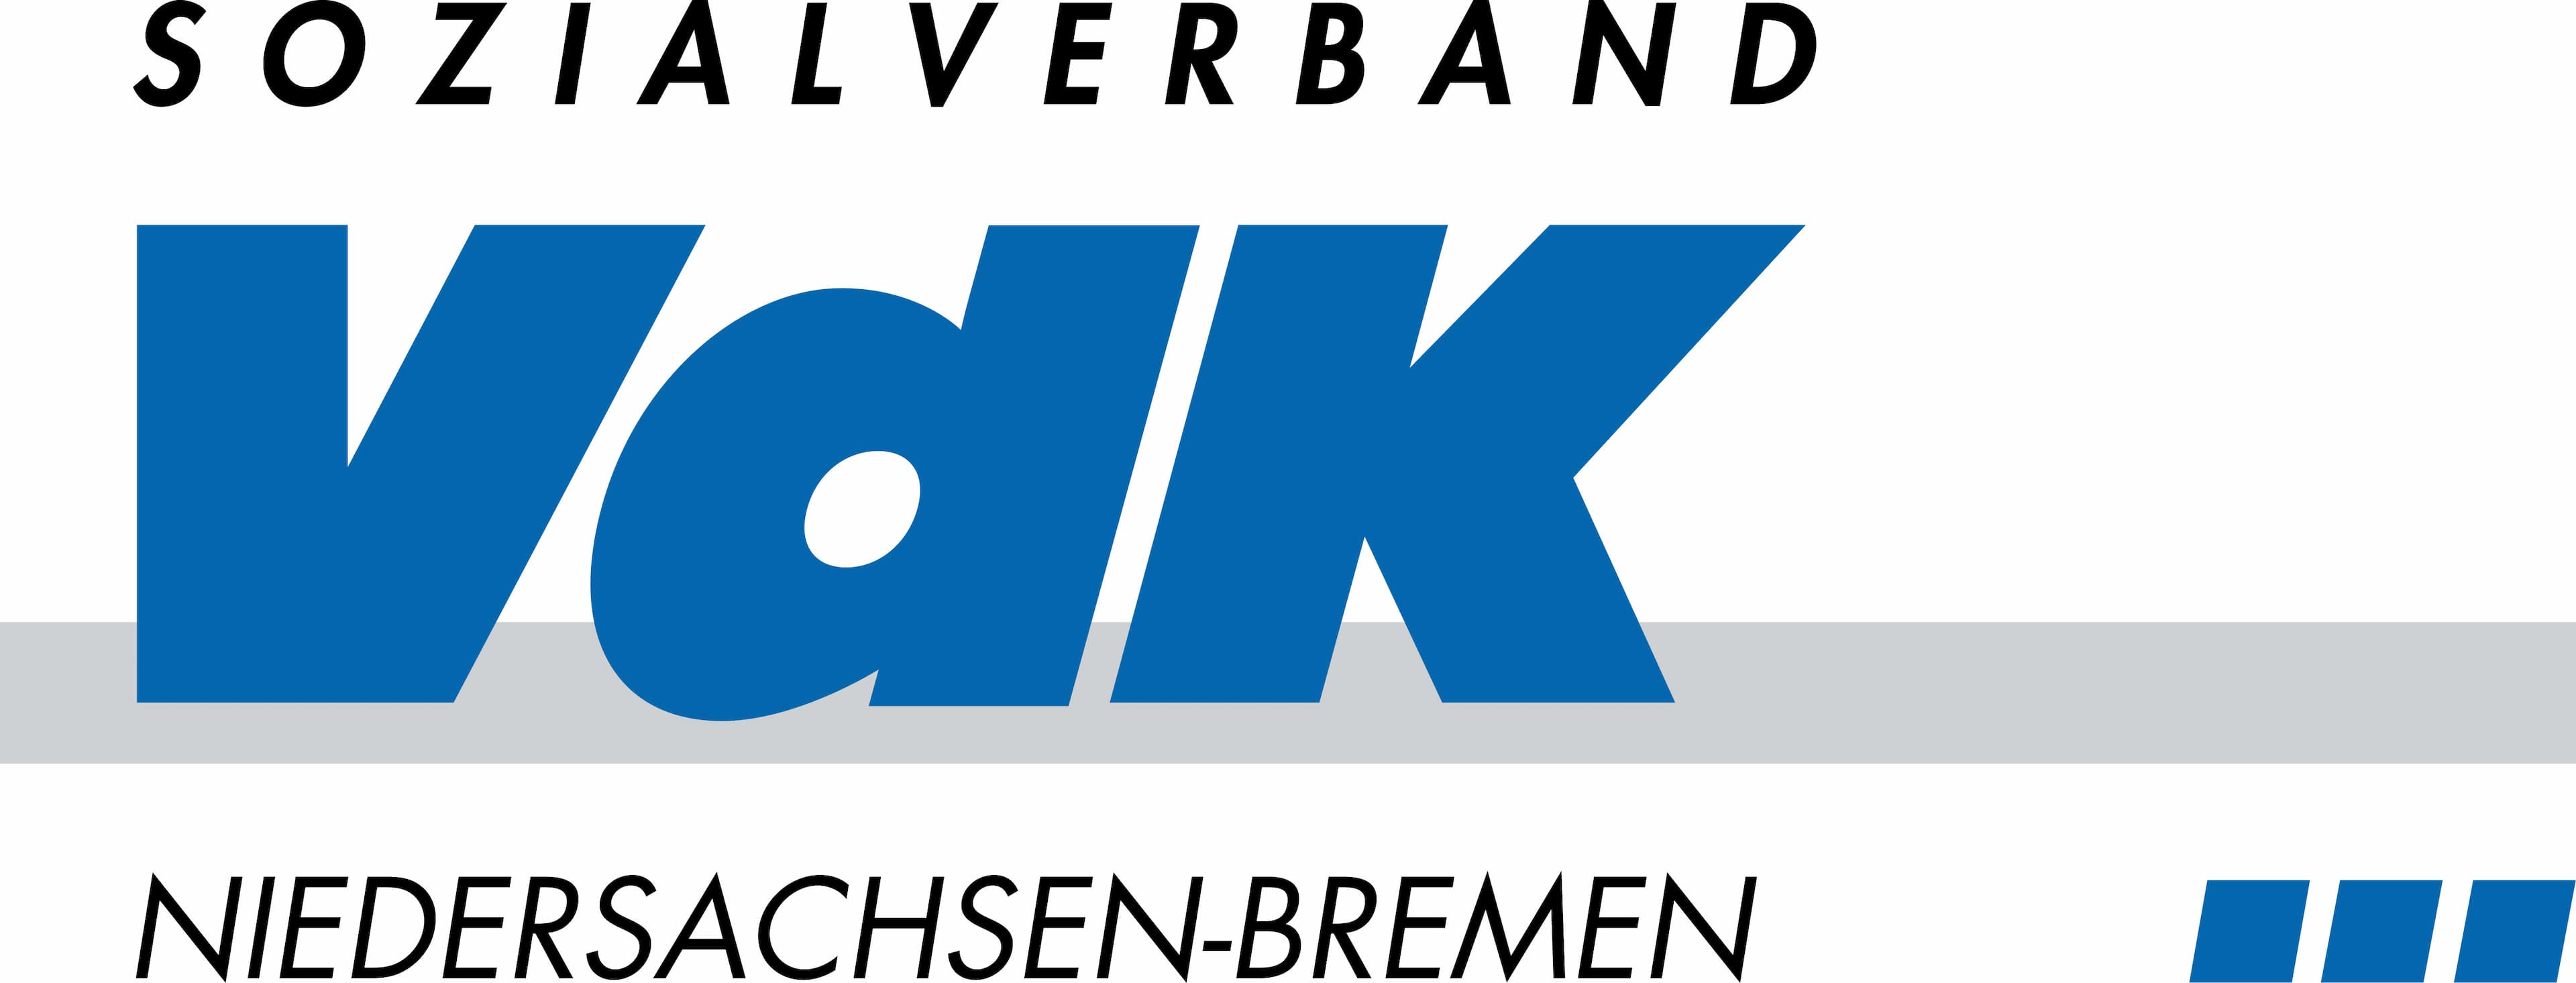 Sozialverband VdK Niedersachsen-Bremen e.V.  logo